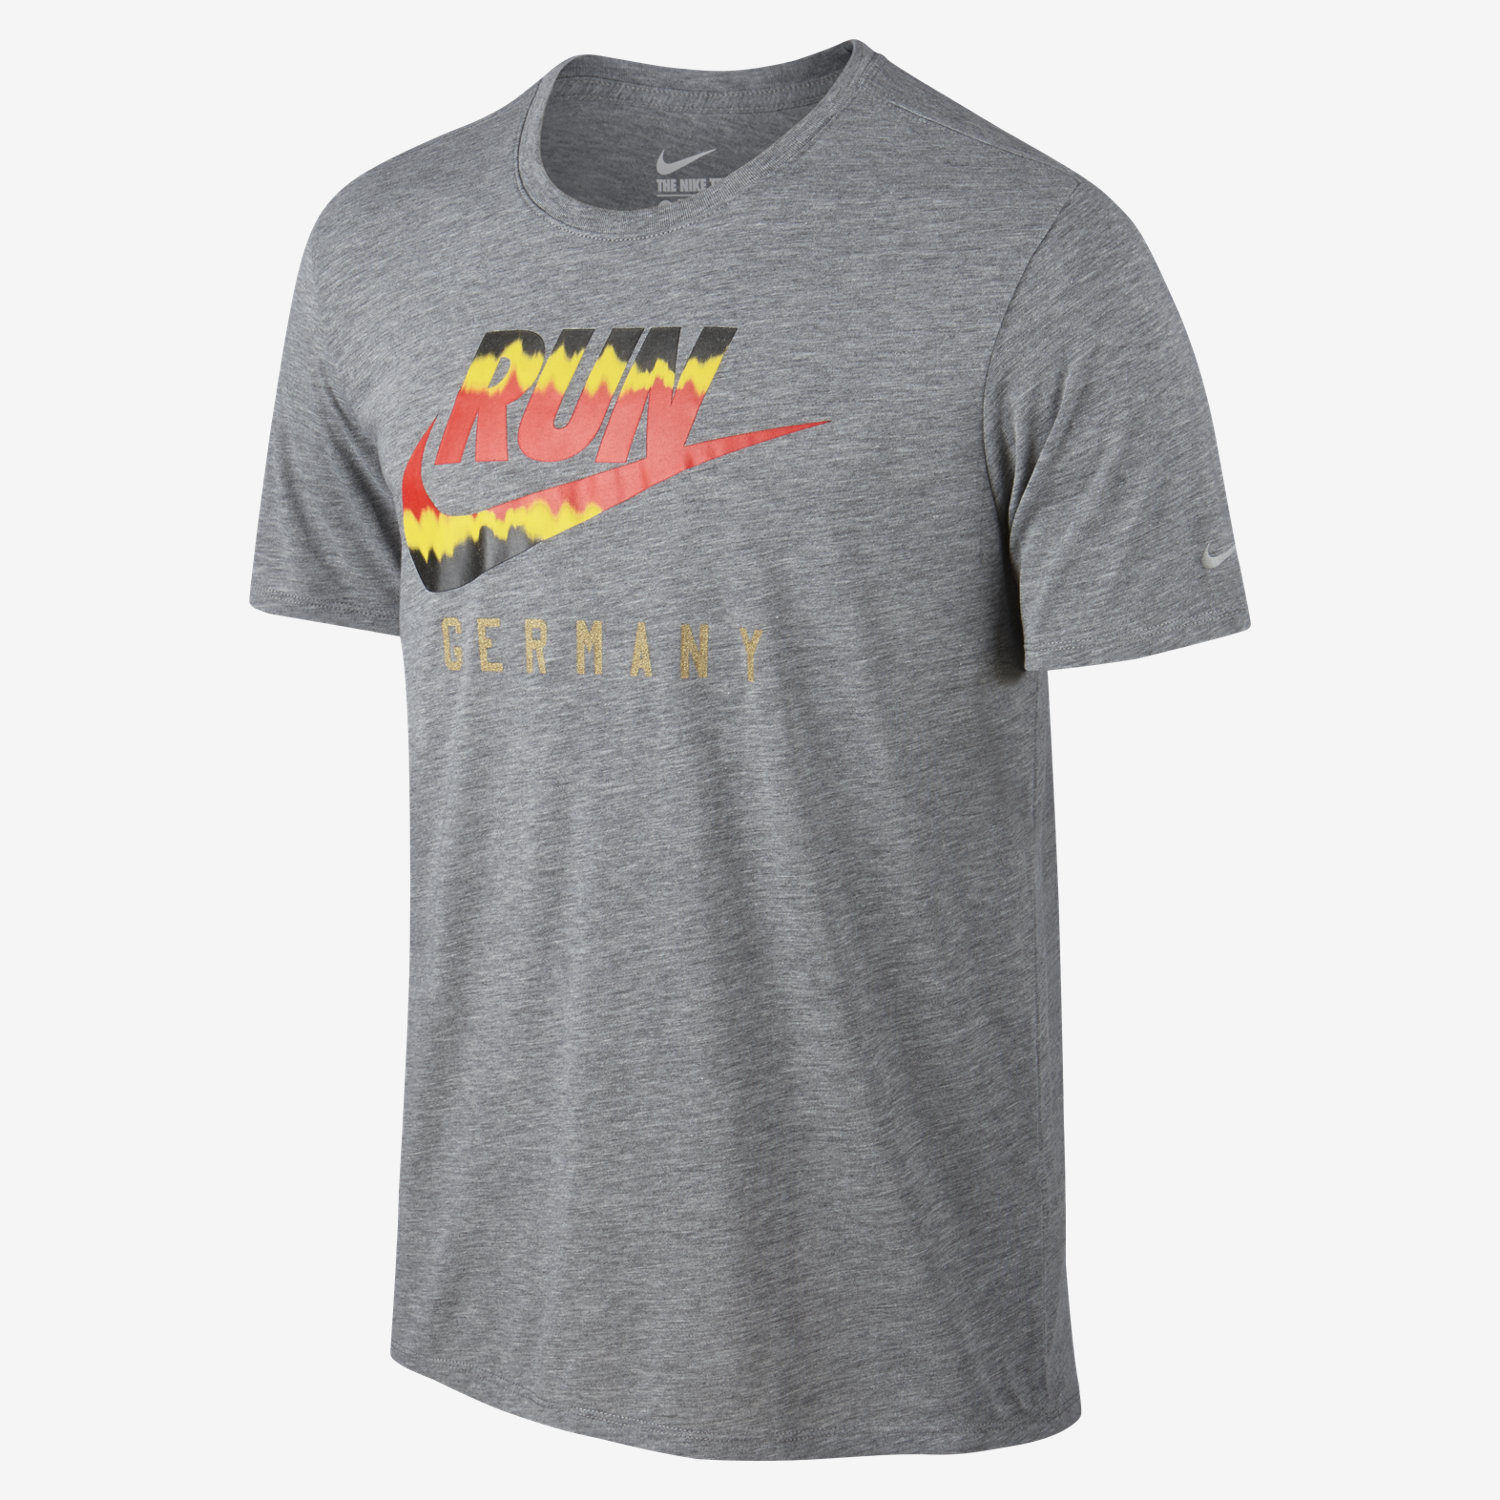 Nike (Germany) - Men's Running T-Shirt